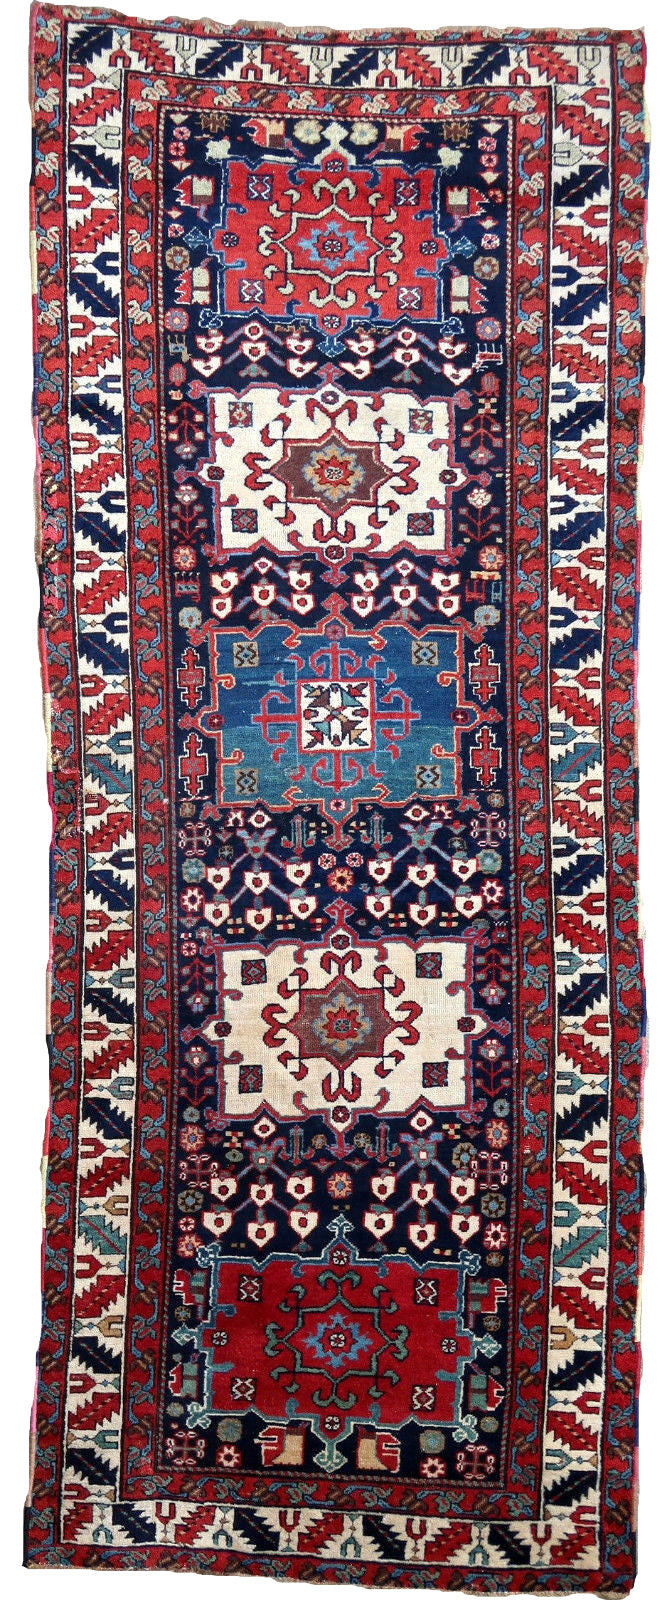 Handmade antique collectible Persian Karajeh rug 1850s